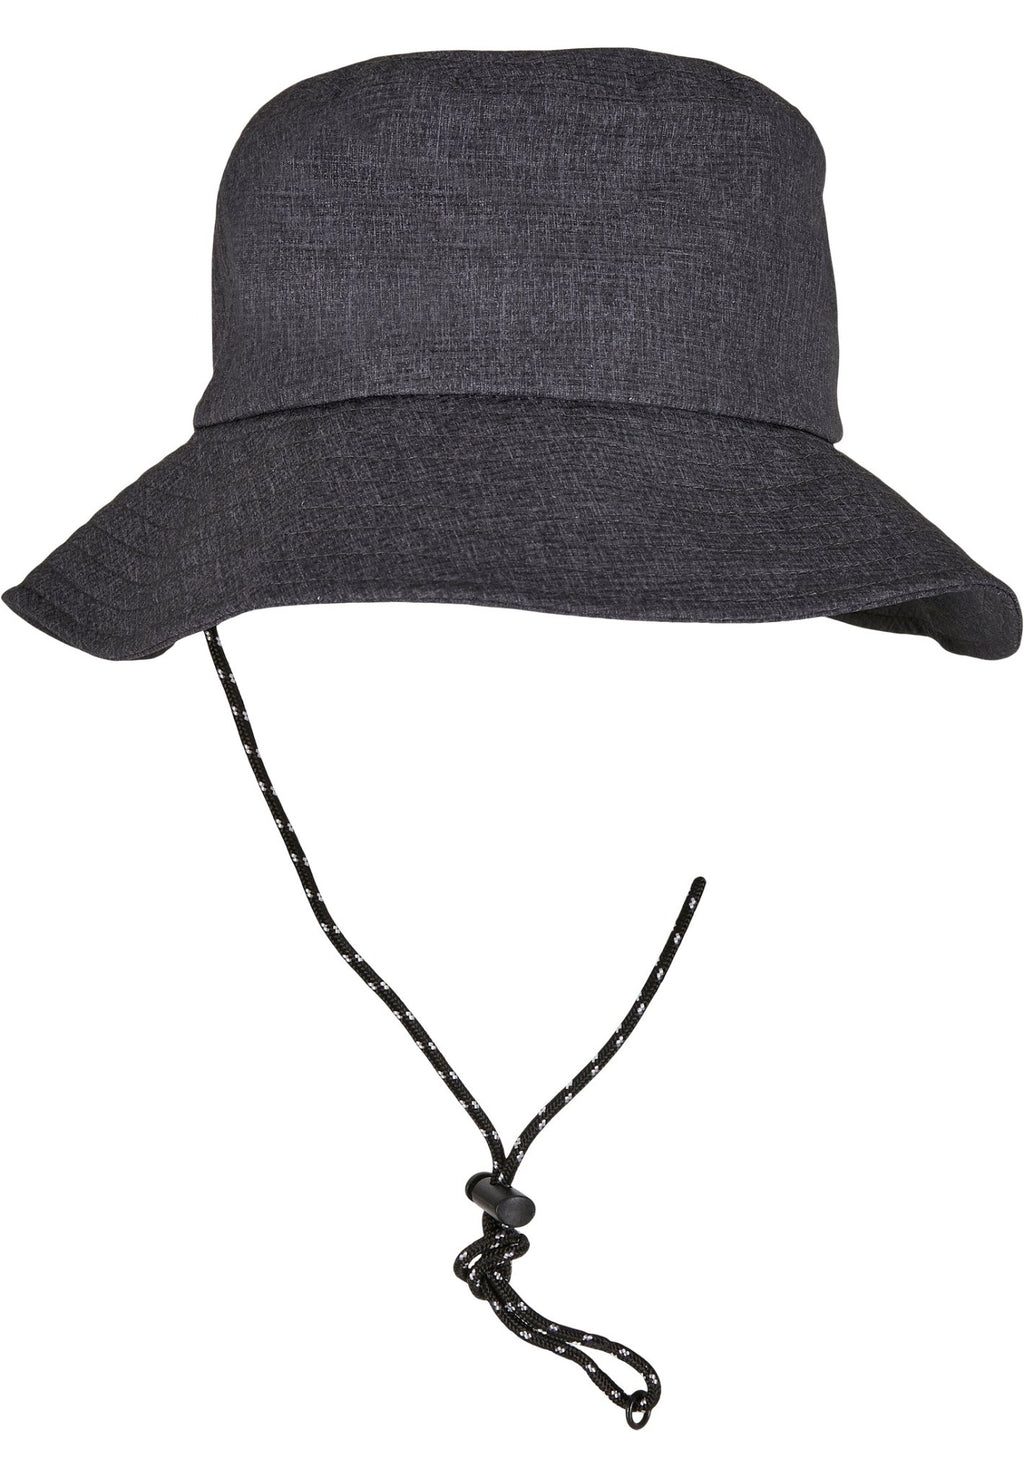 Adjustable Flexfit Bucket Hat - Heather grey